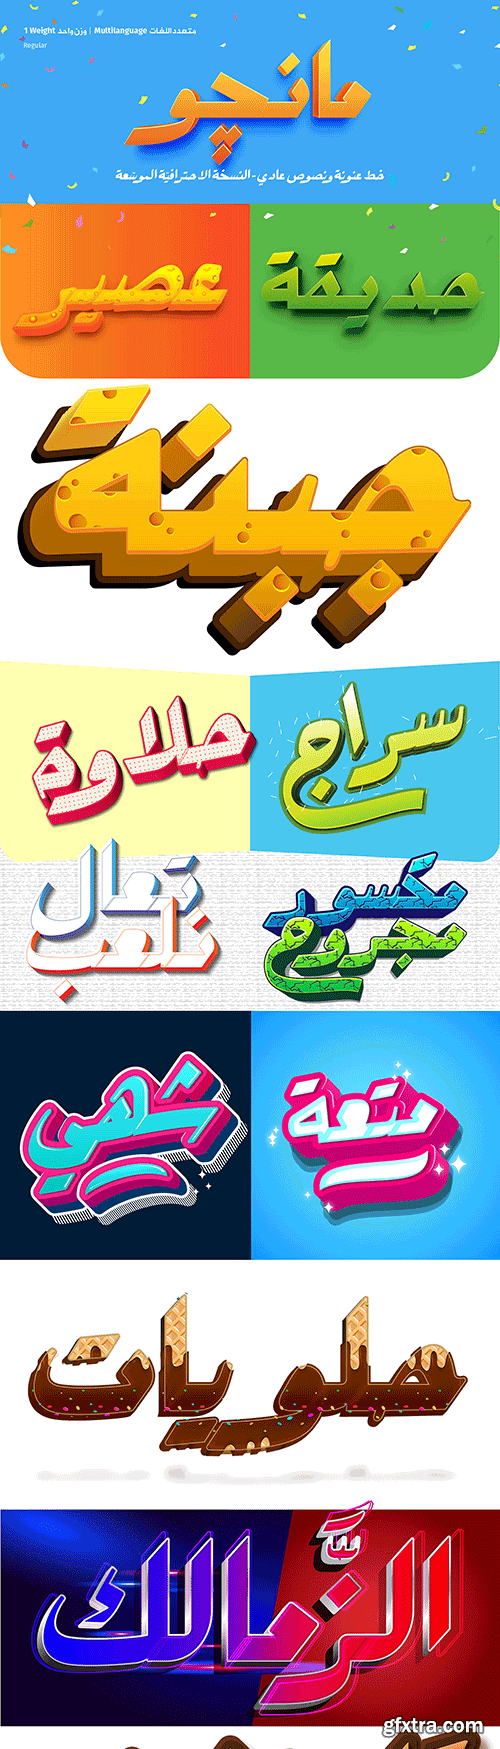 RTL ManGo Arabic Typeface